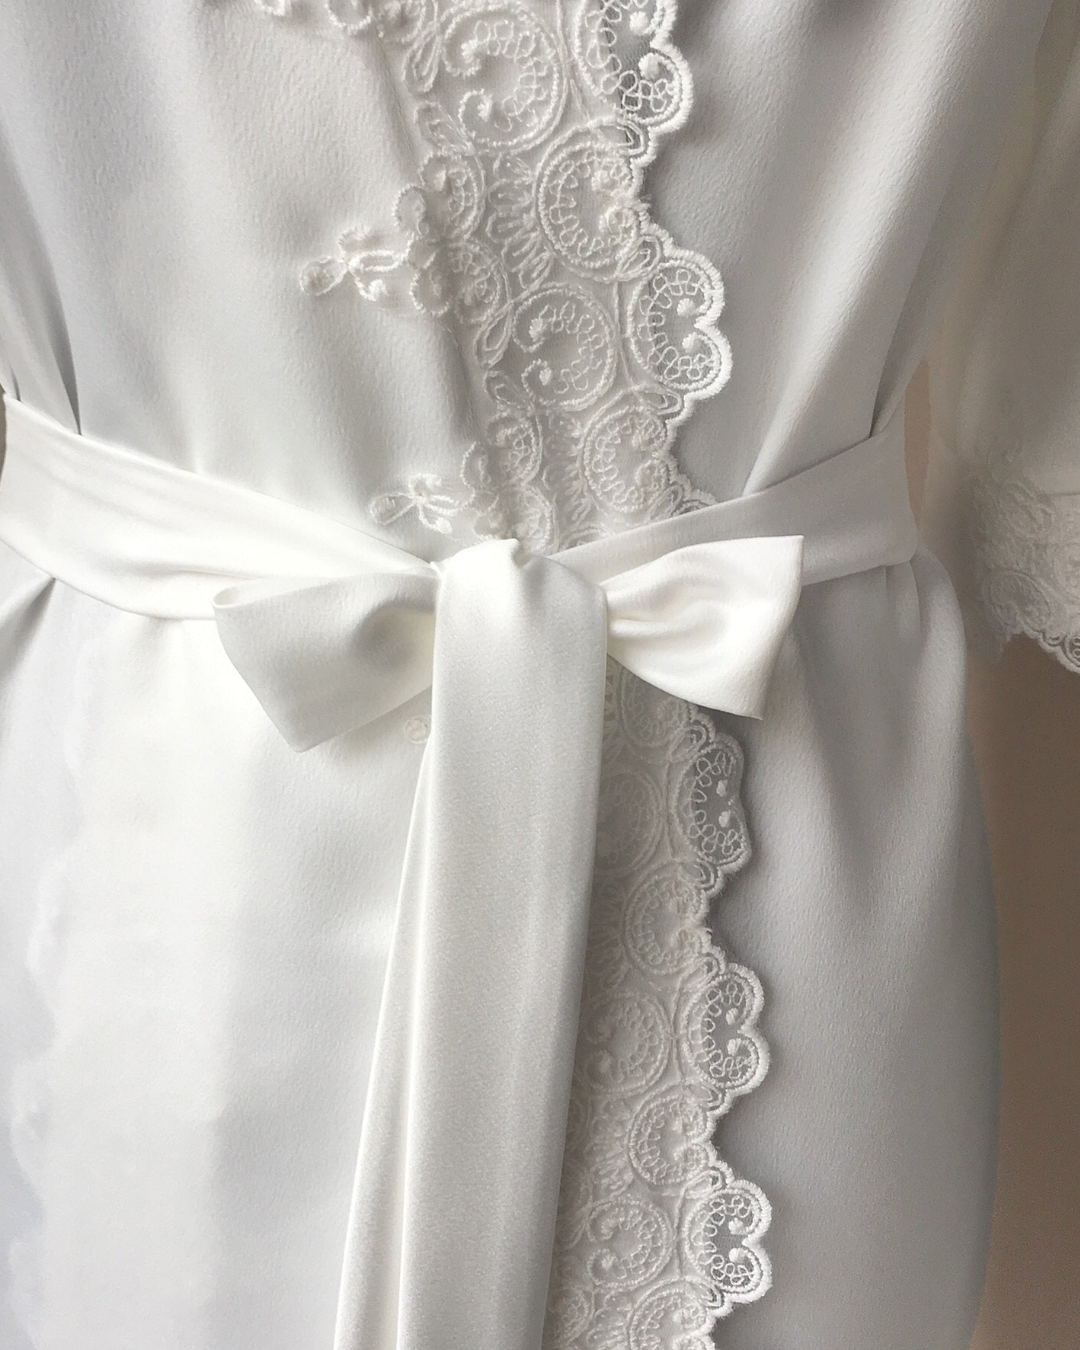 a white robe with a white ribbon tied around it